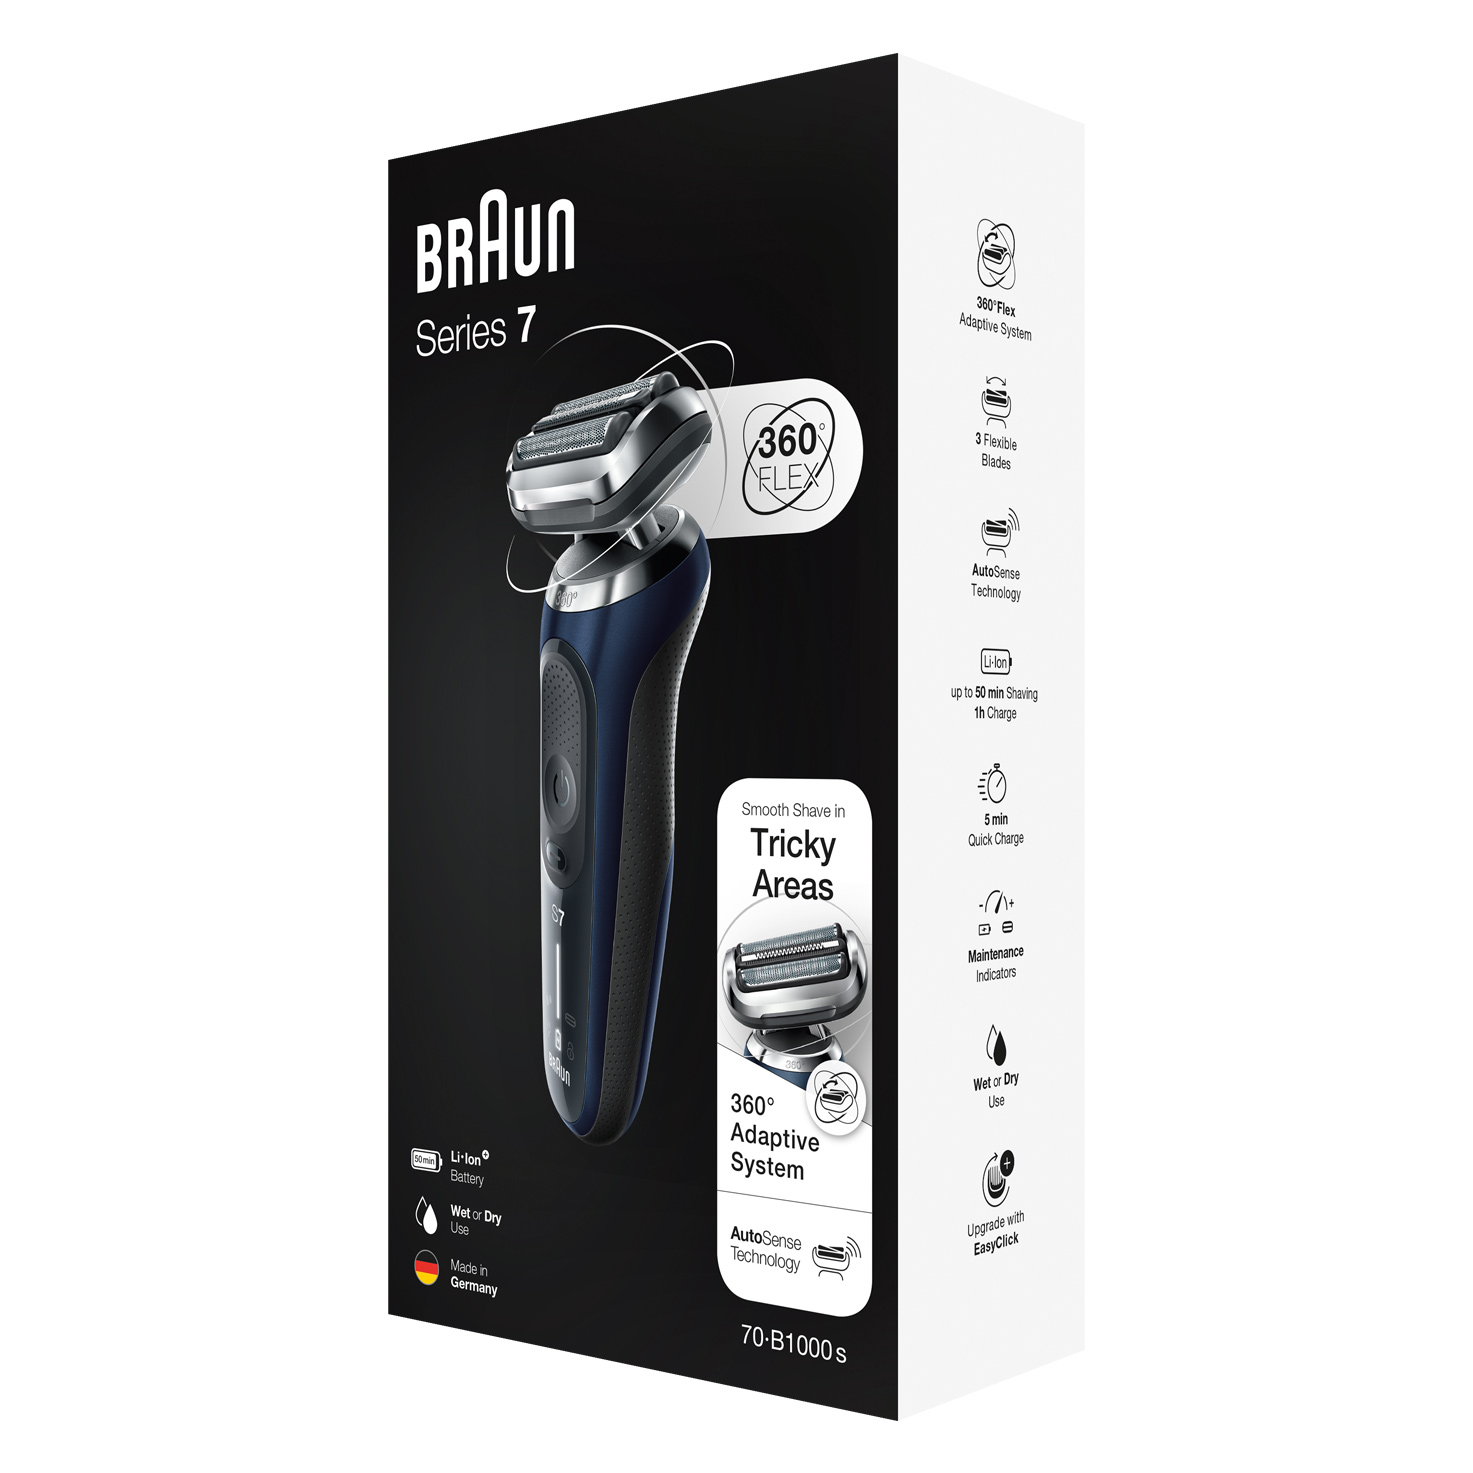 Braun Series 7 70-B1000s shaver - packaging